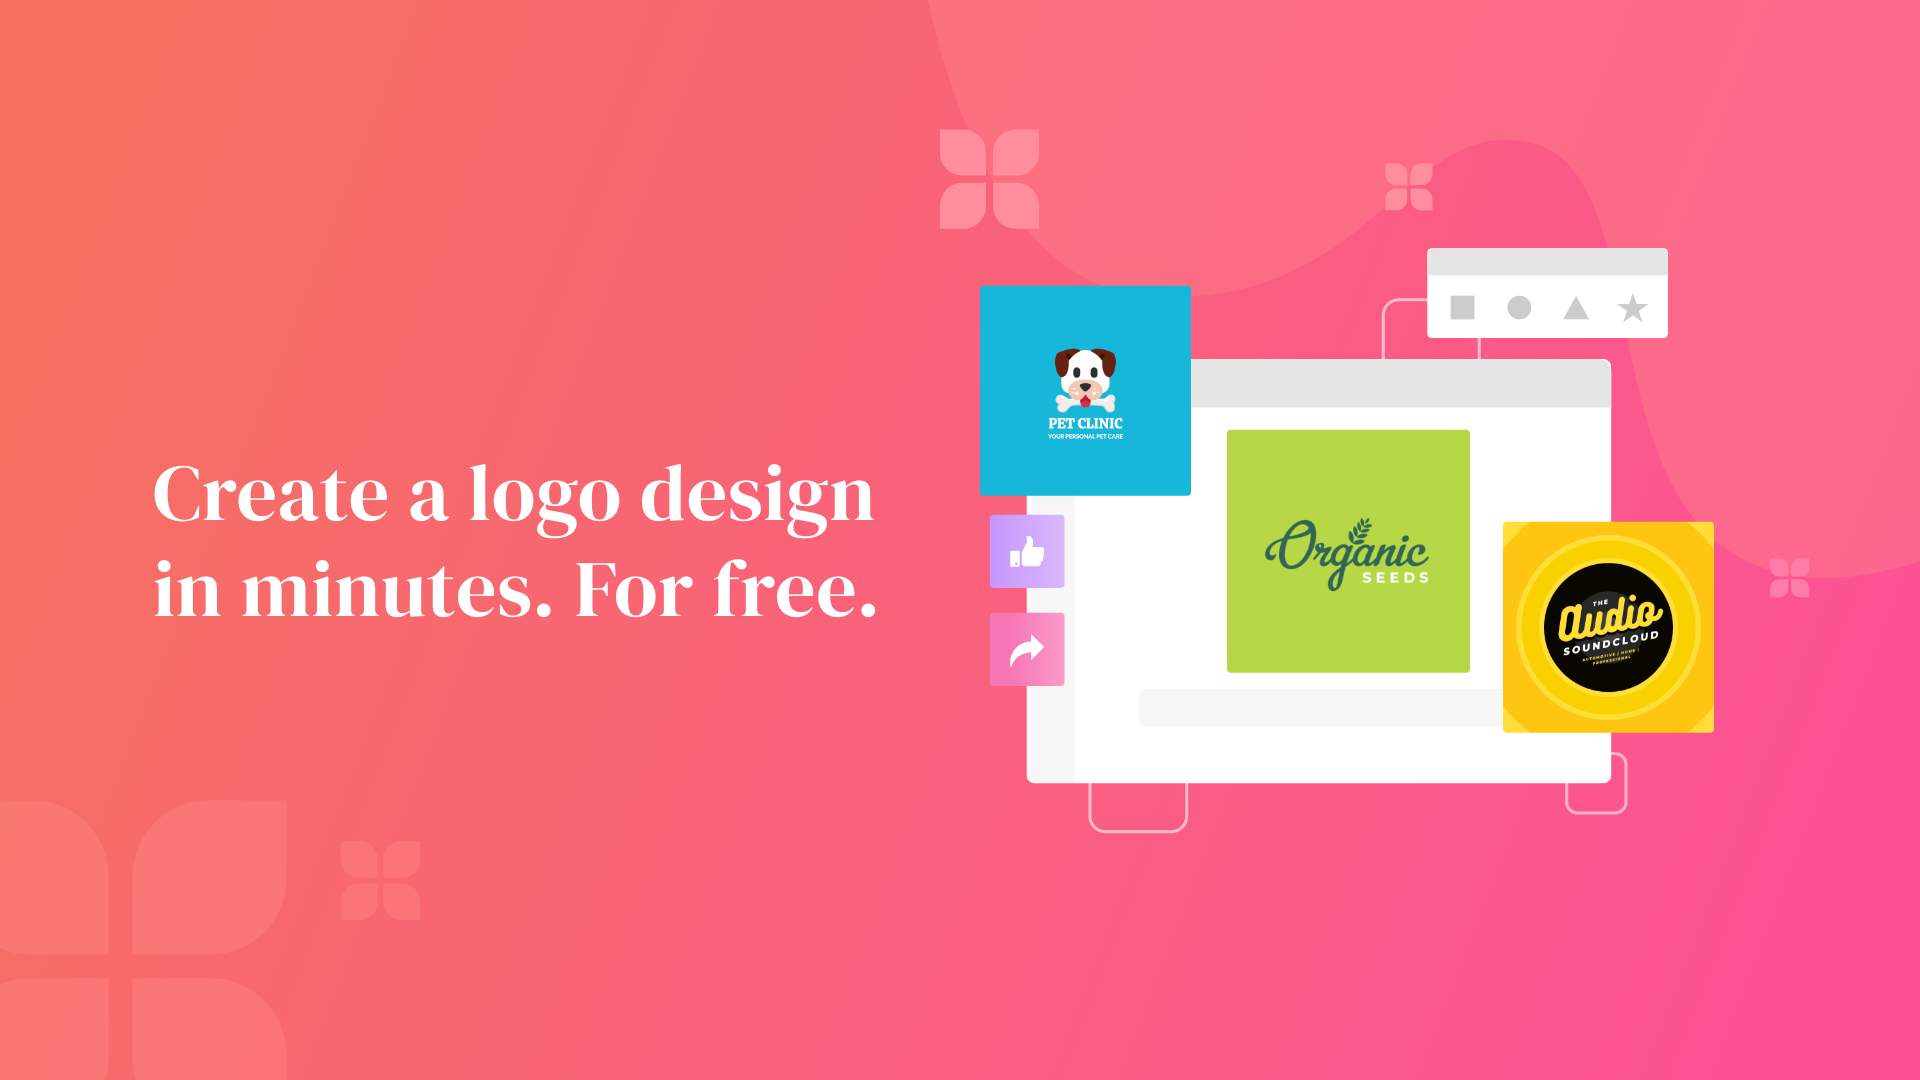 100% free logo creator and download nonprofit